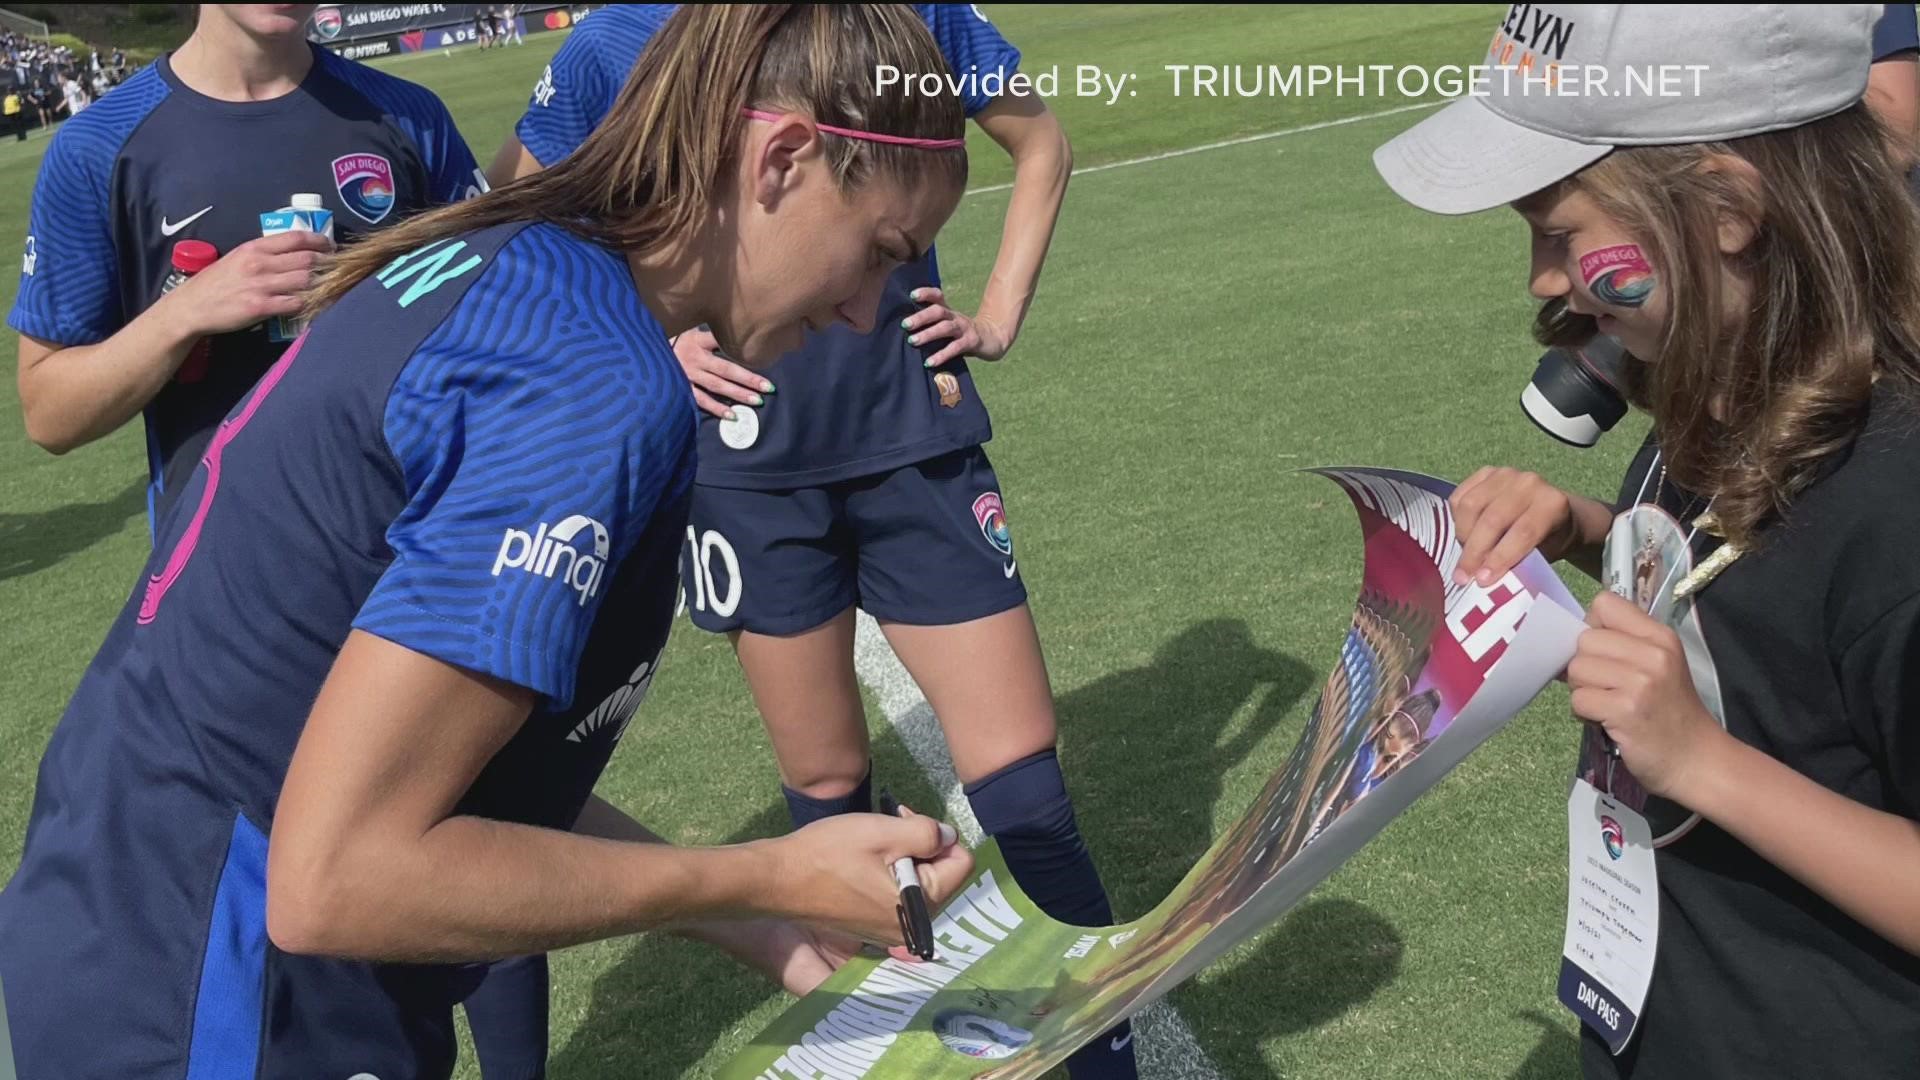 Soccer stars Alex Morgan and Megan Rapinoe made a 10-year old girl's dreams come true.